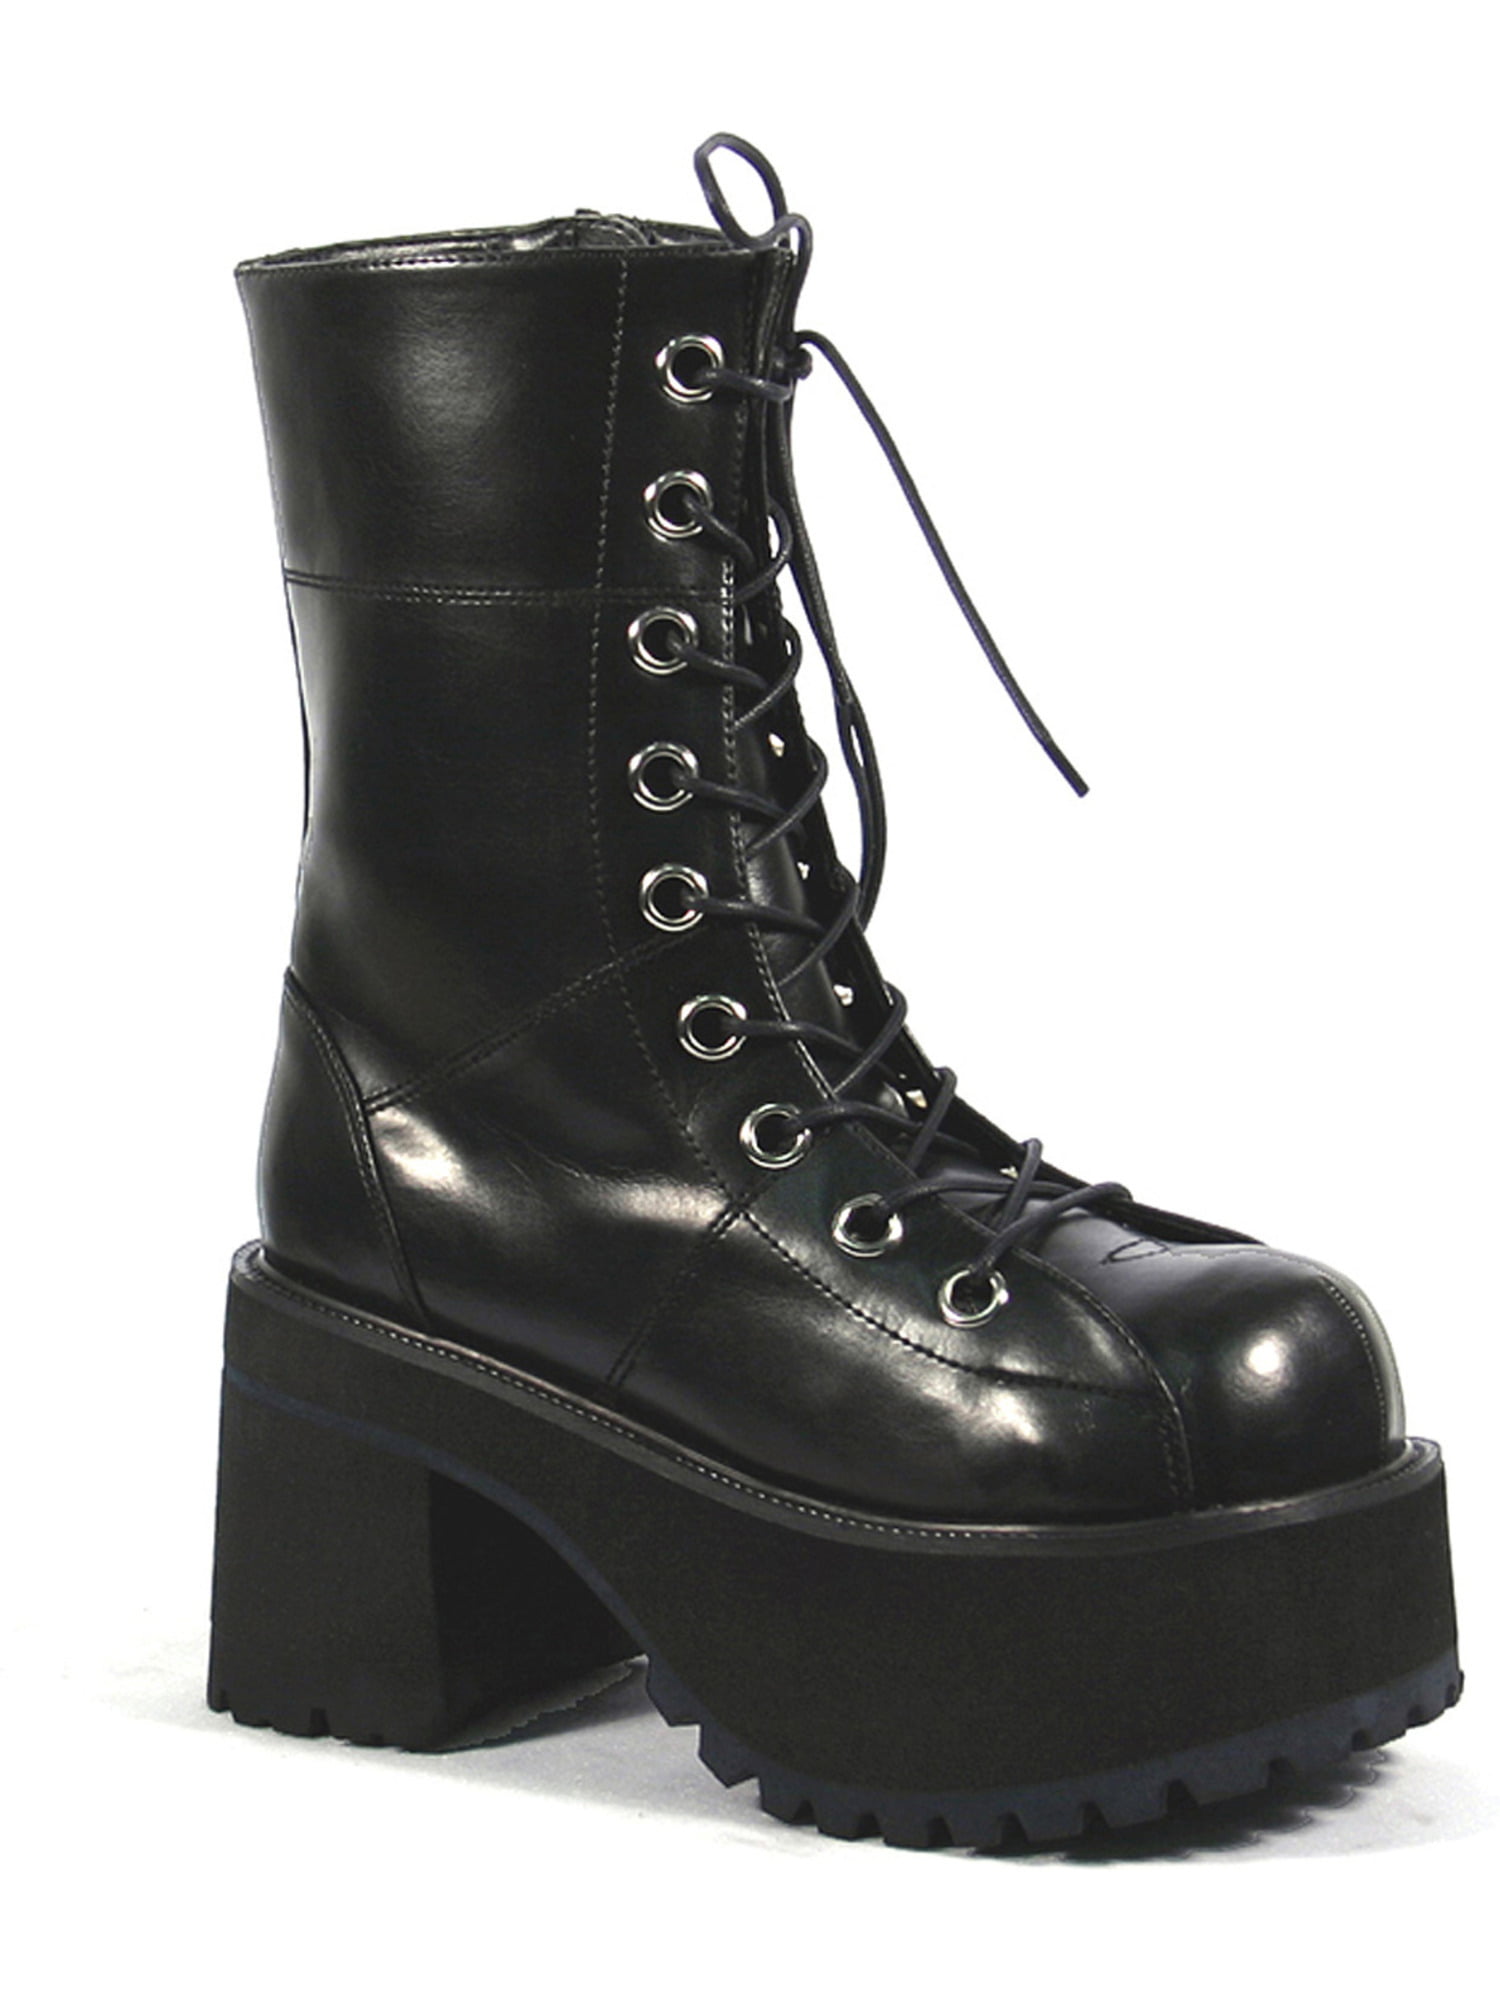 1 inch platform boots